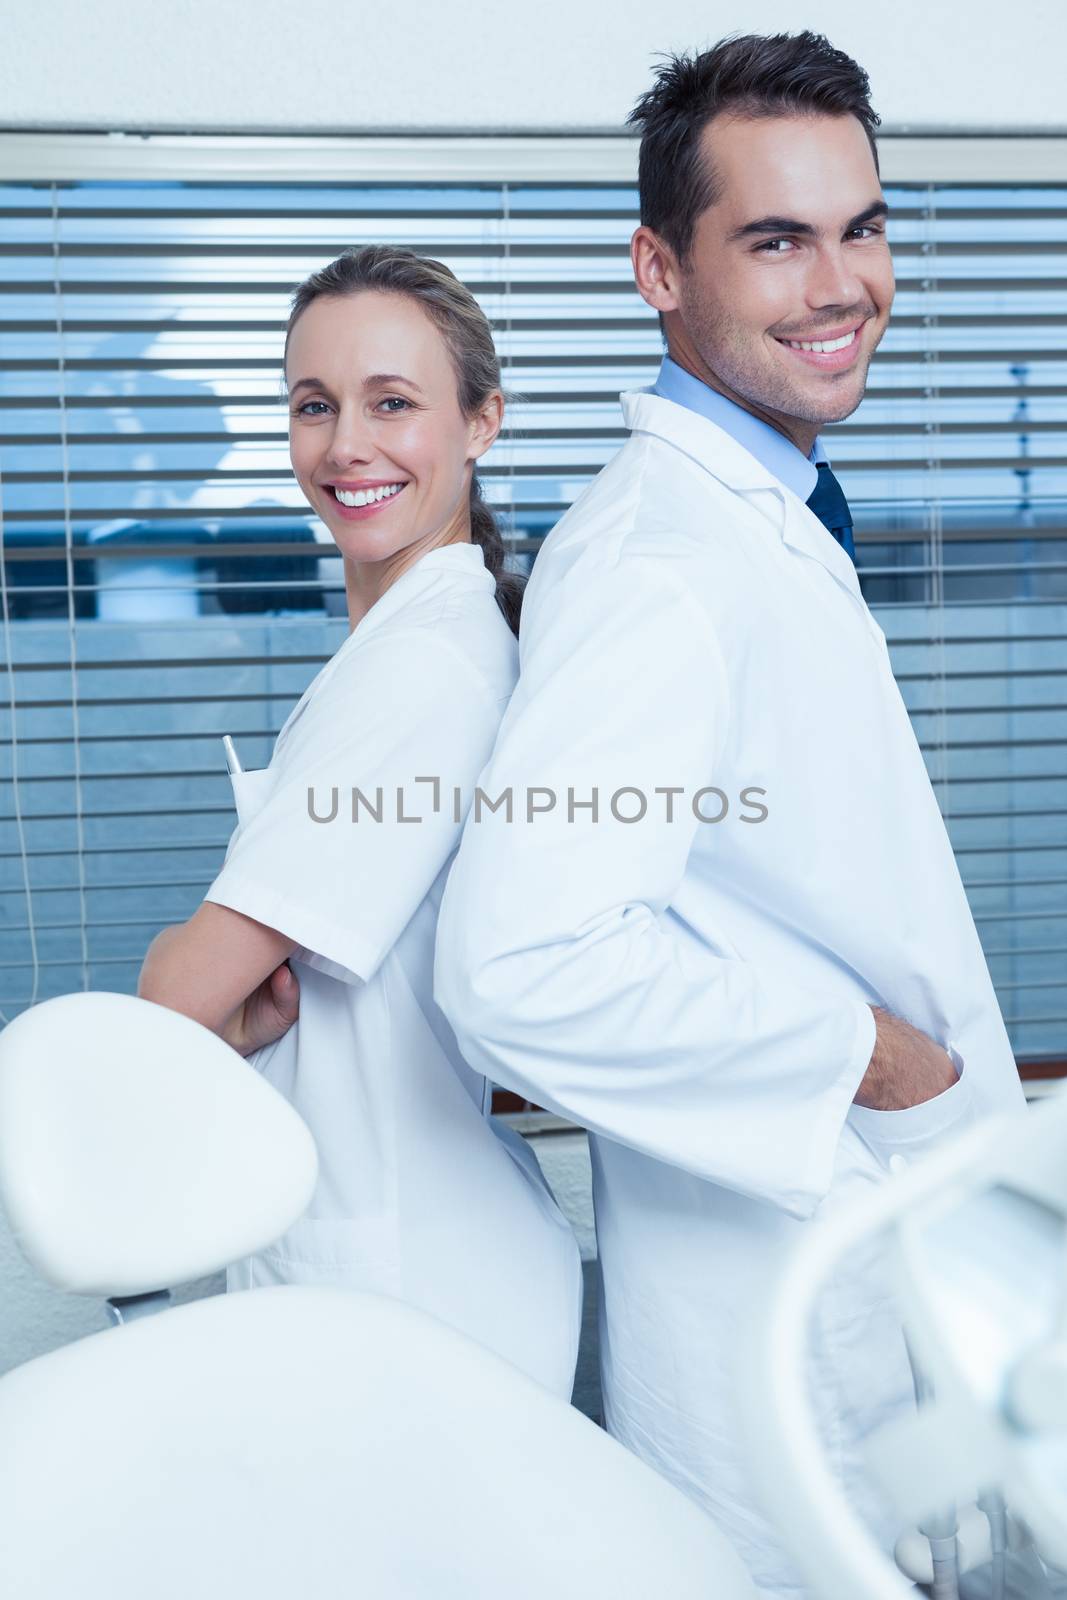 Portrait of smiling dentists by Wavebreakmedia